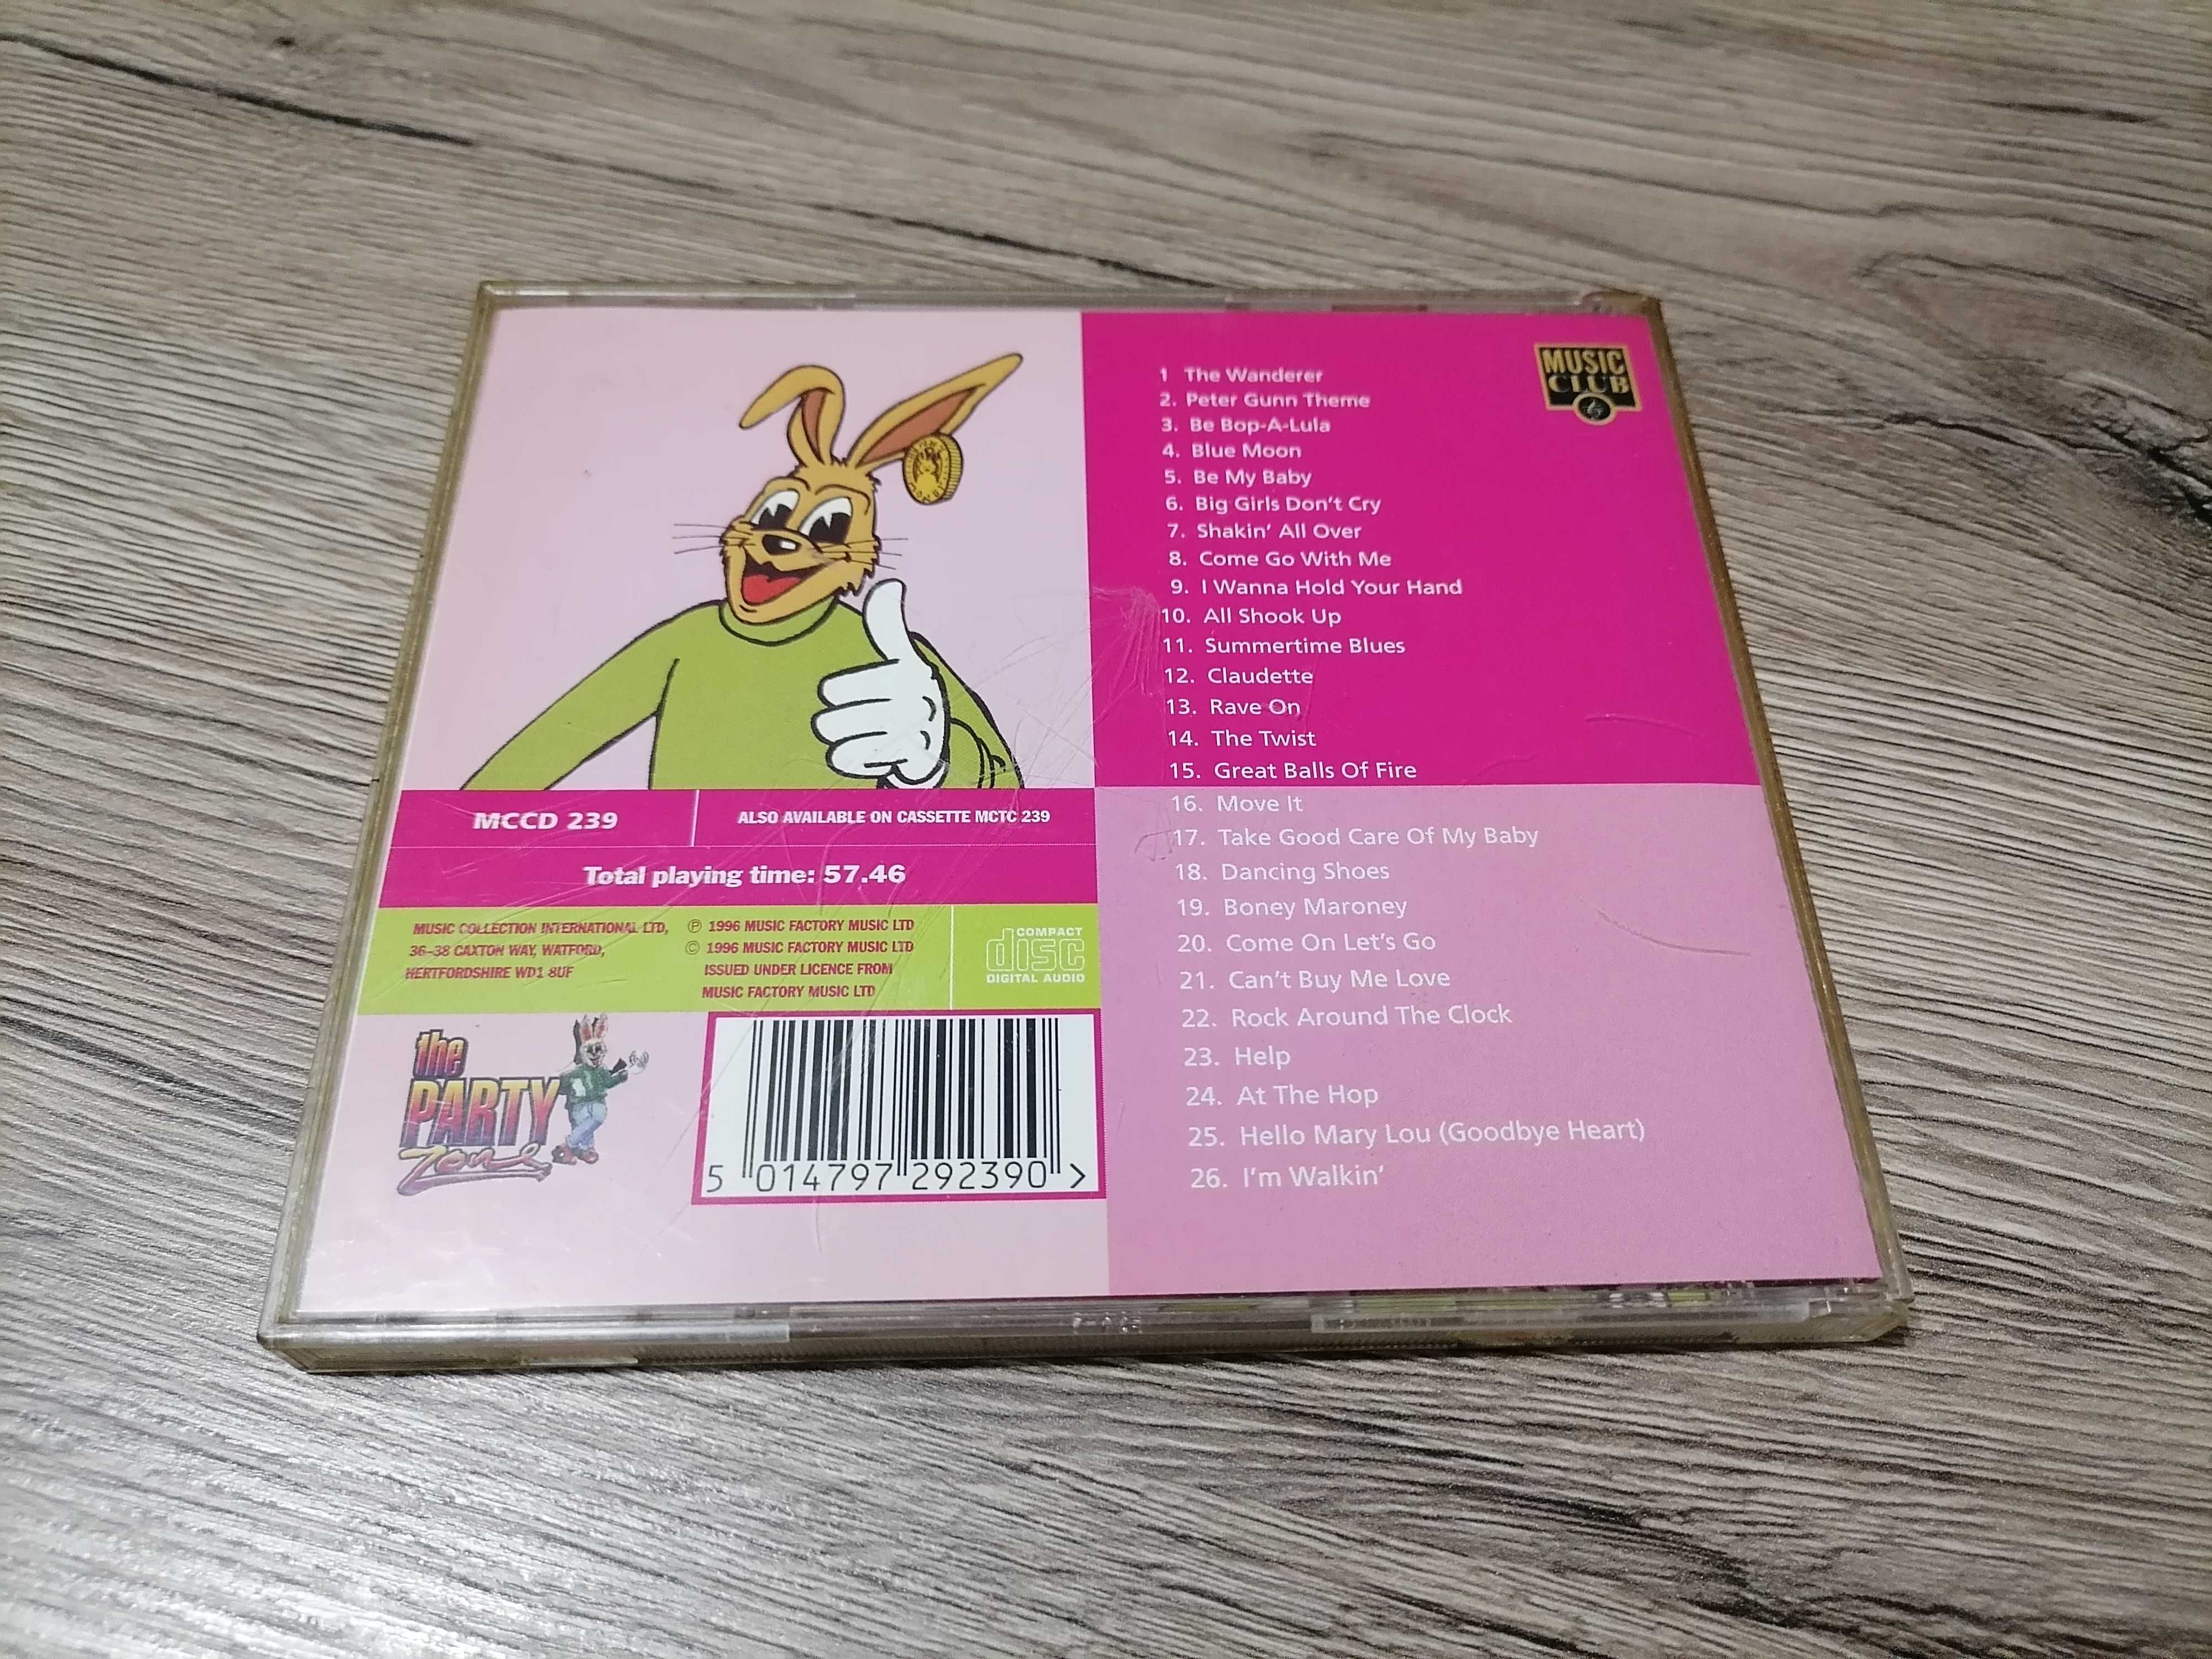 Jive Bunny And The Mastermixers – Non-Stop Juke Box CD